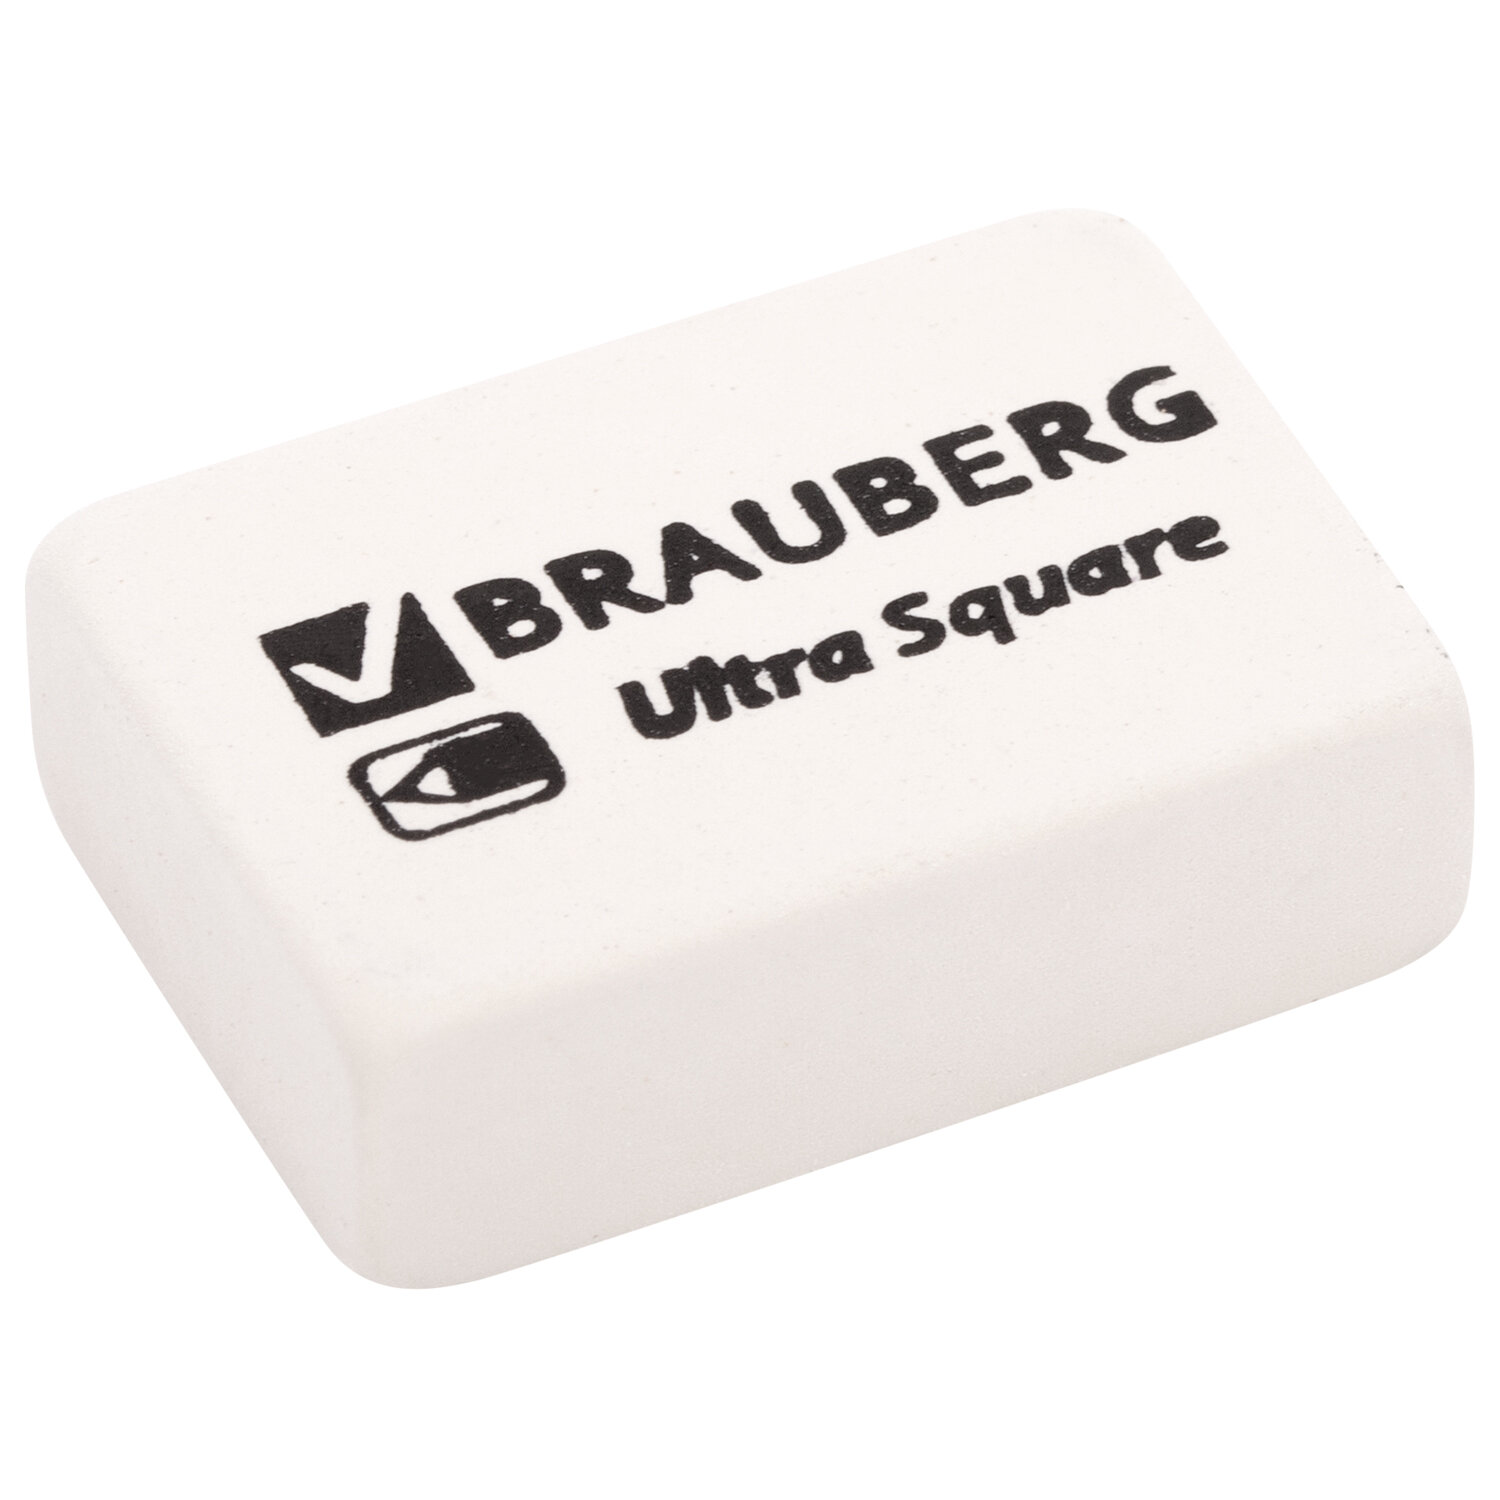 Ластики BRAUBERG "Ultra Square" 6 шт., размер ластика 29х18х8 мм, белые, натуральный каучук